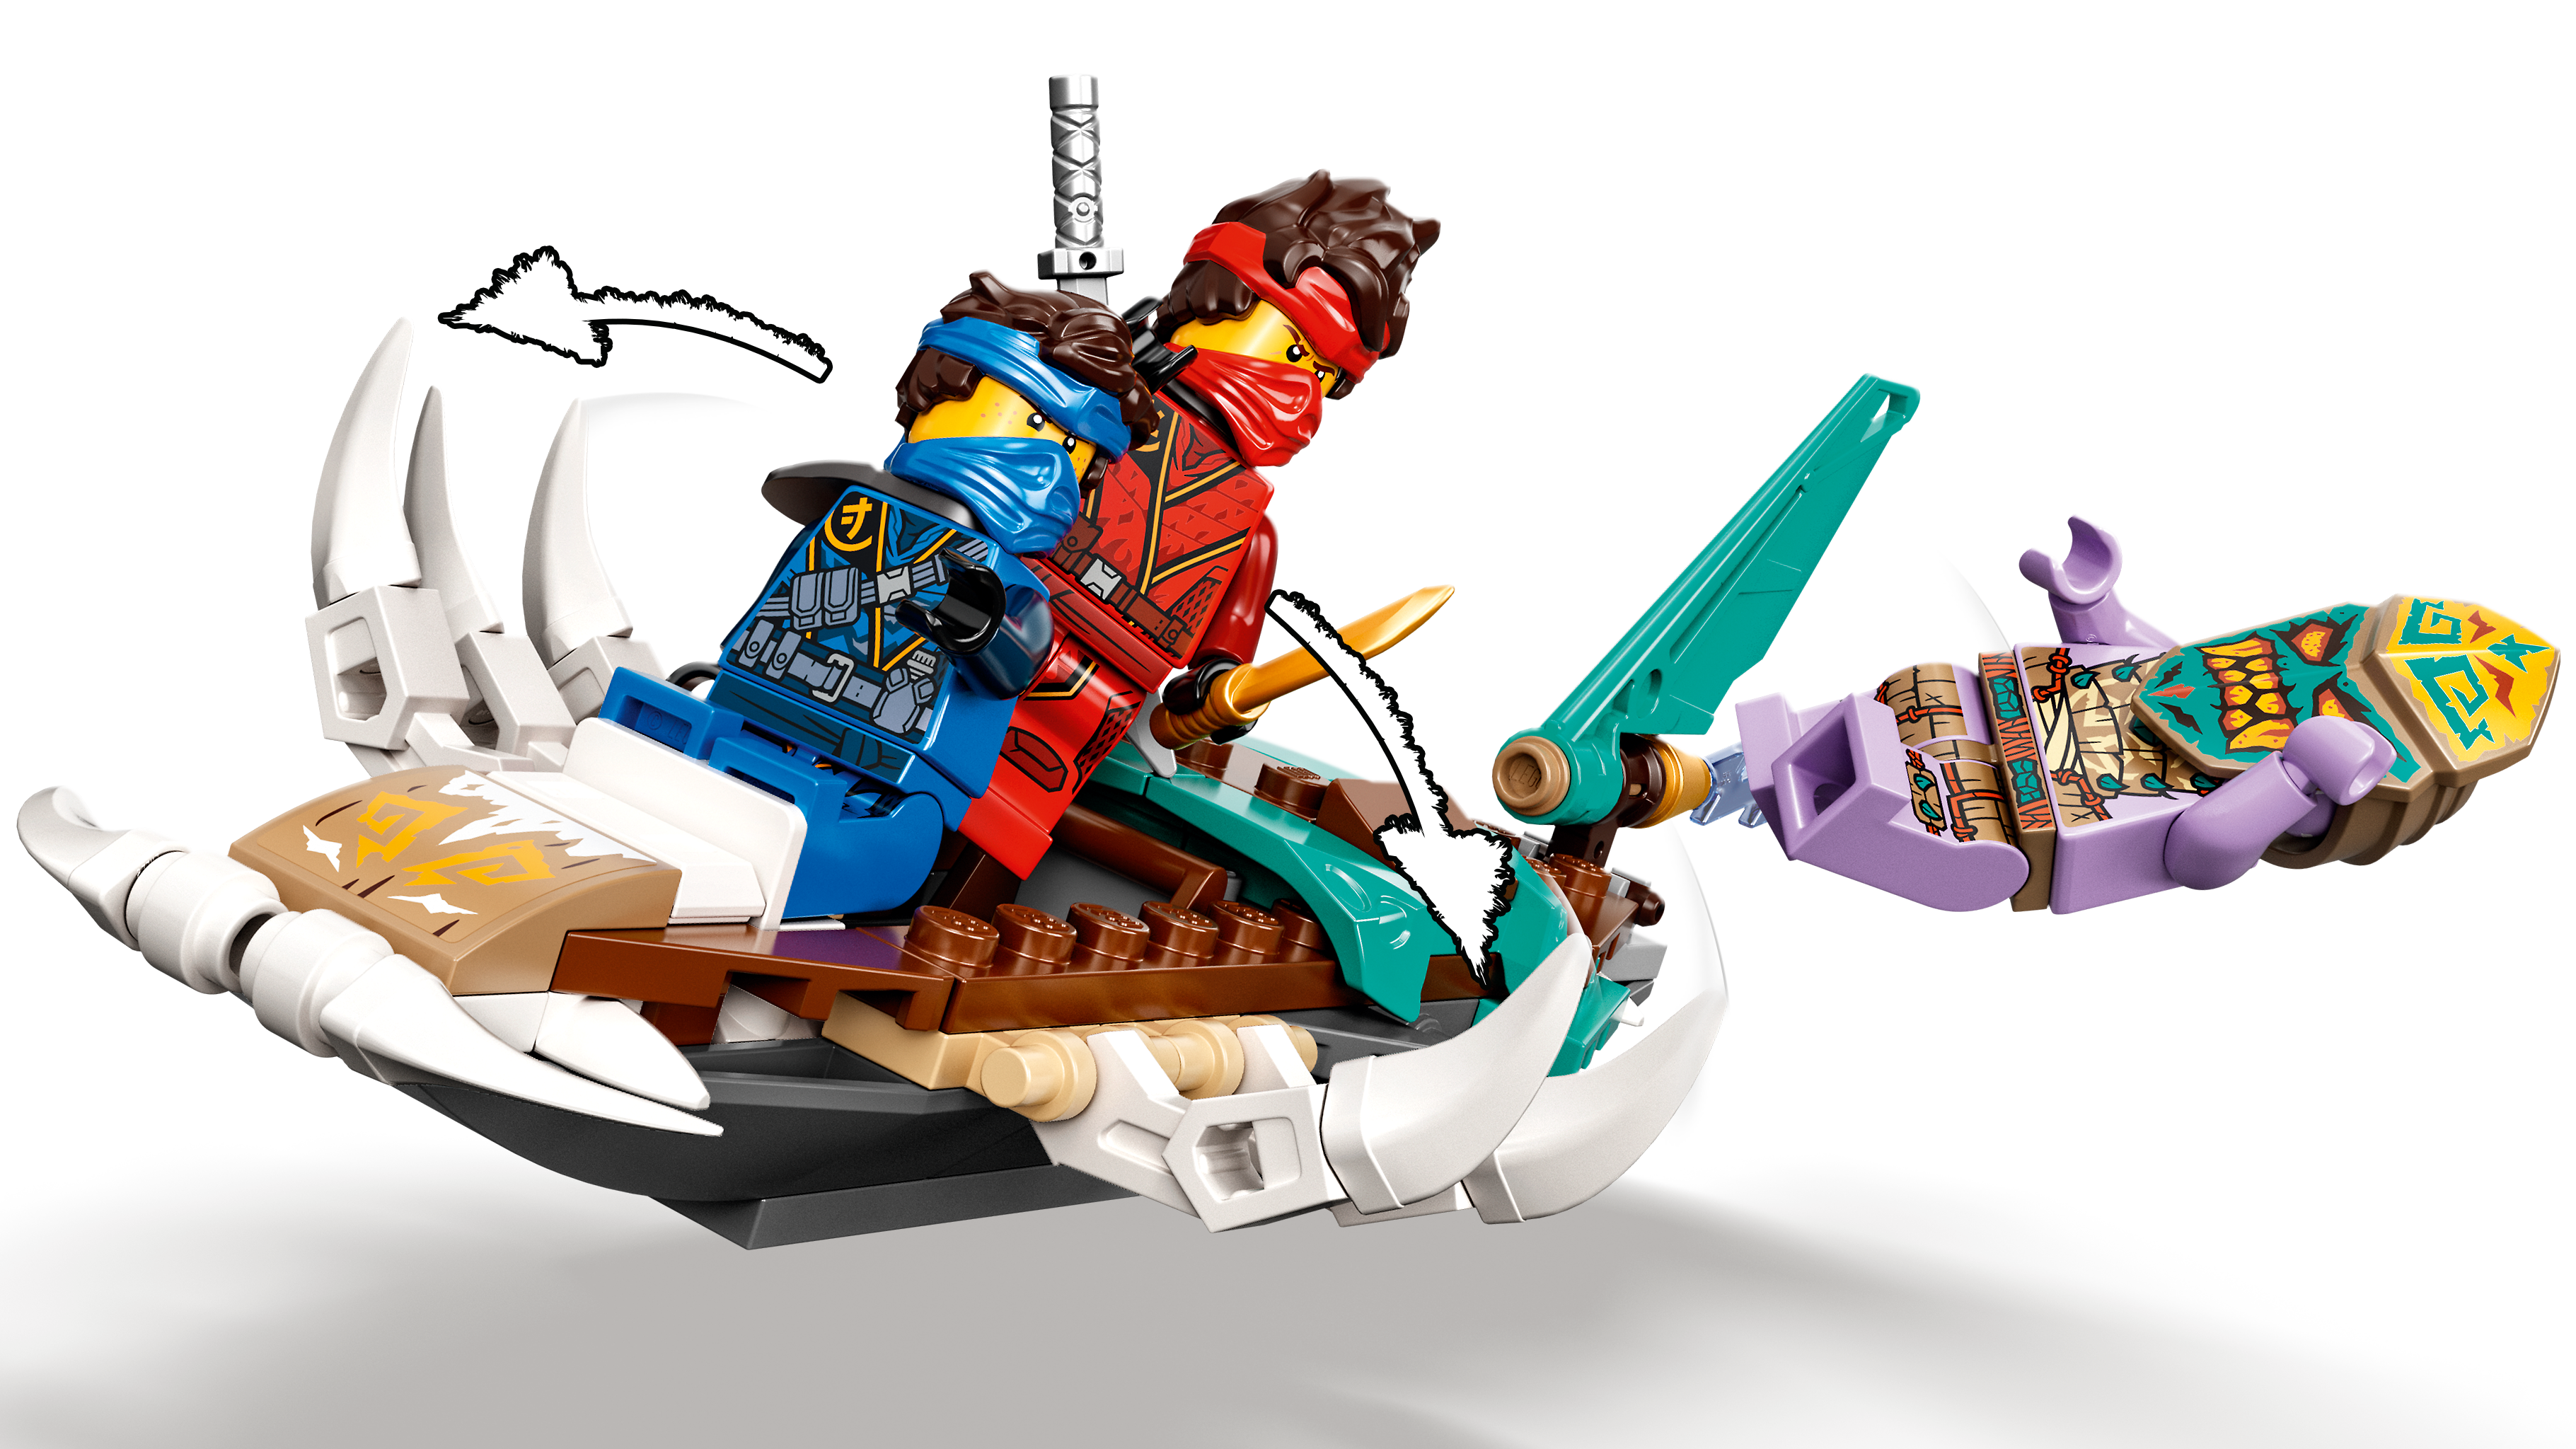 Catamaran Sea Battle 71748 Ninjago Buy Online At The Official Lego Shop Za